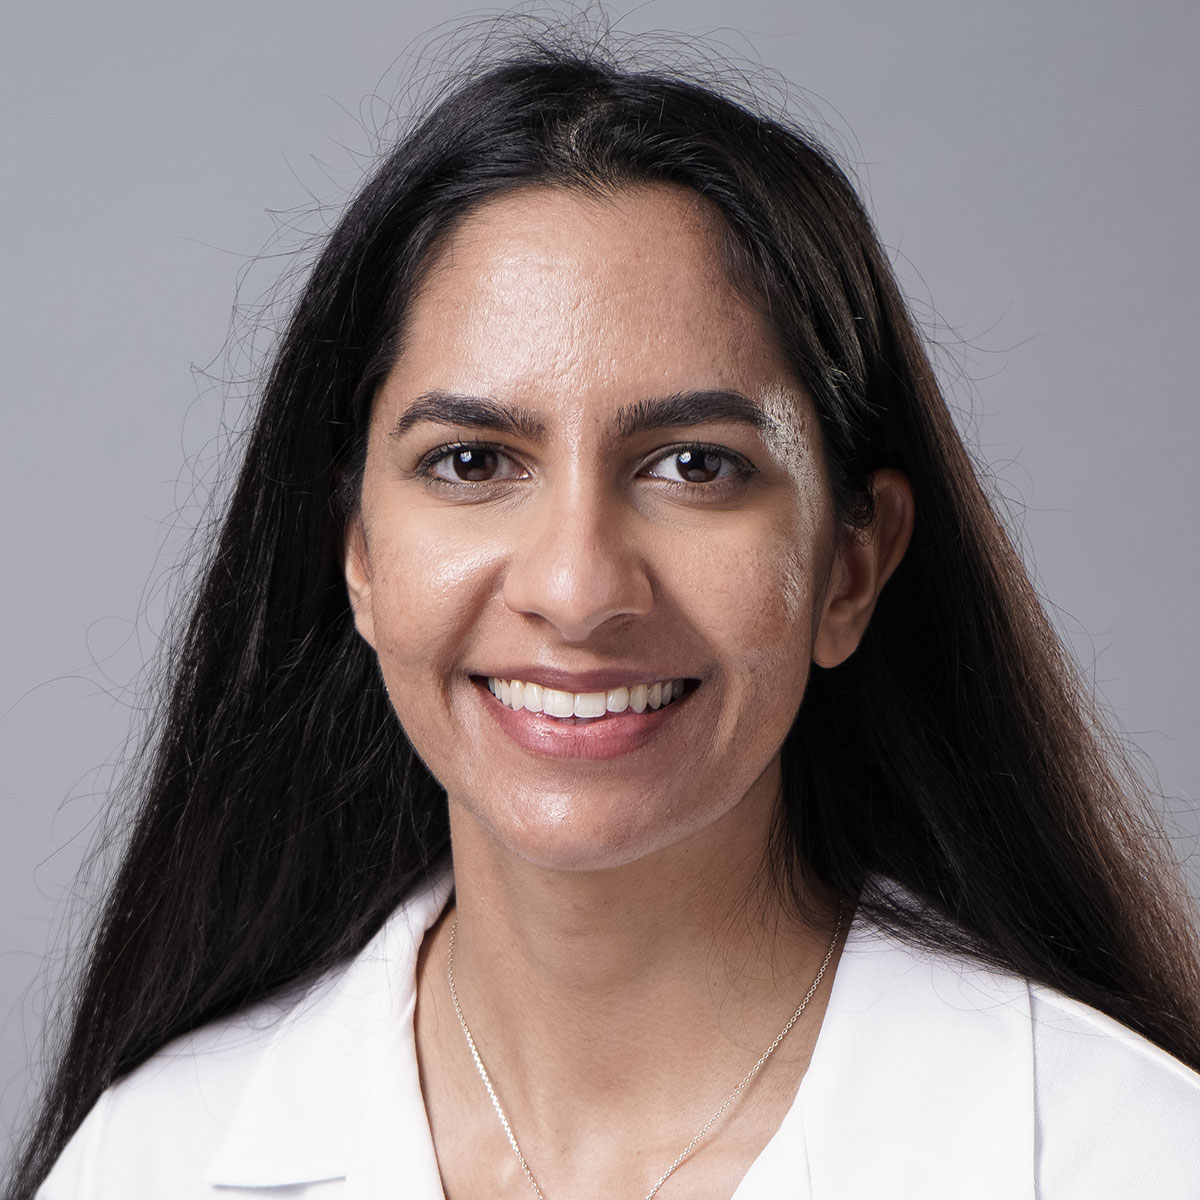 A friendly headshot of Dr. Alisa Chauhan